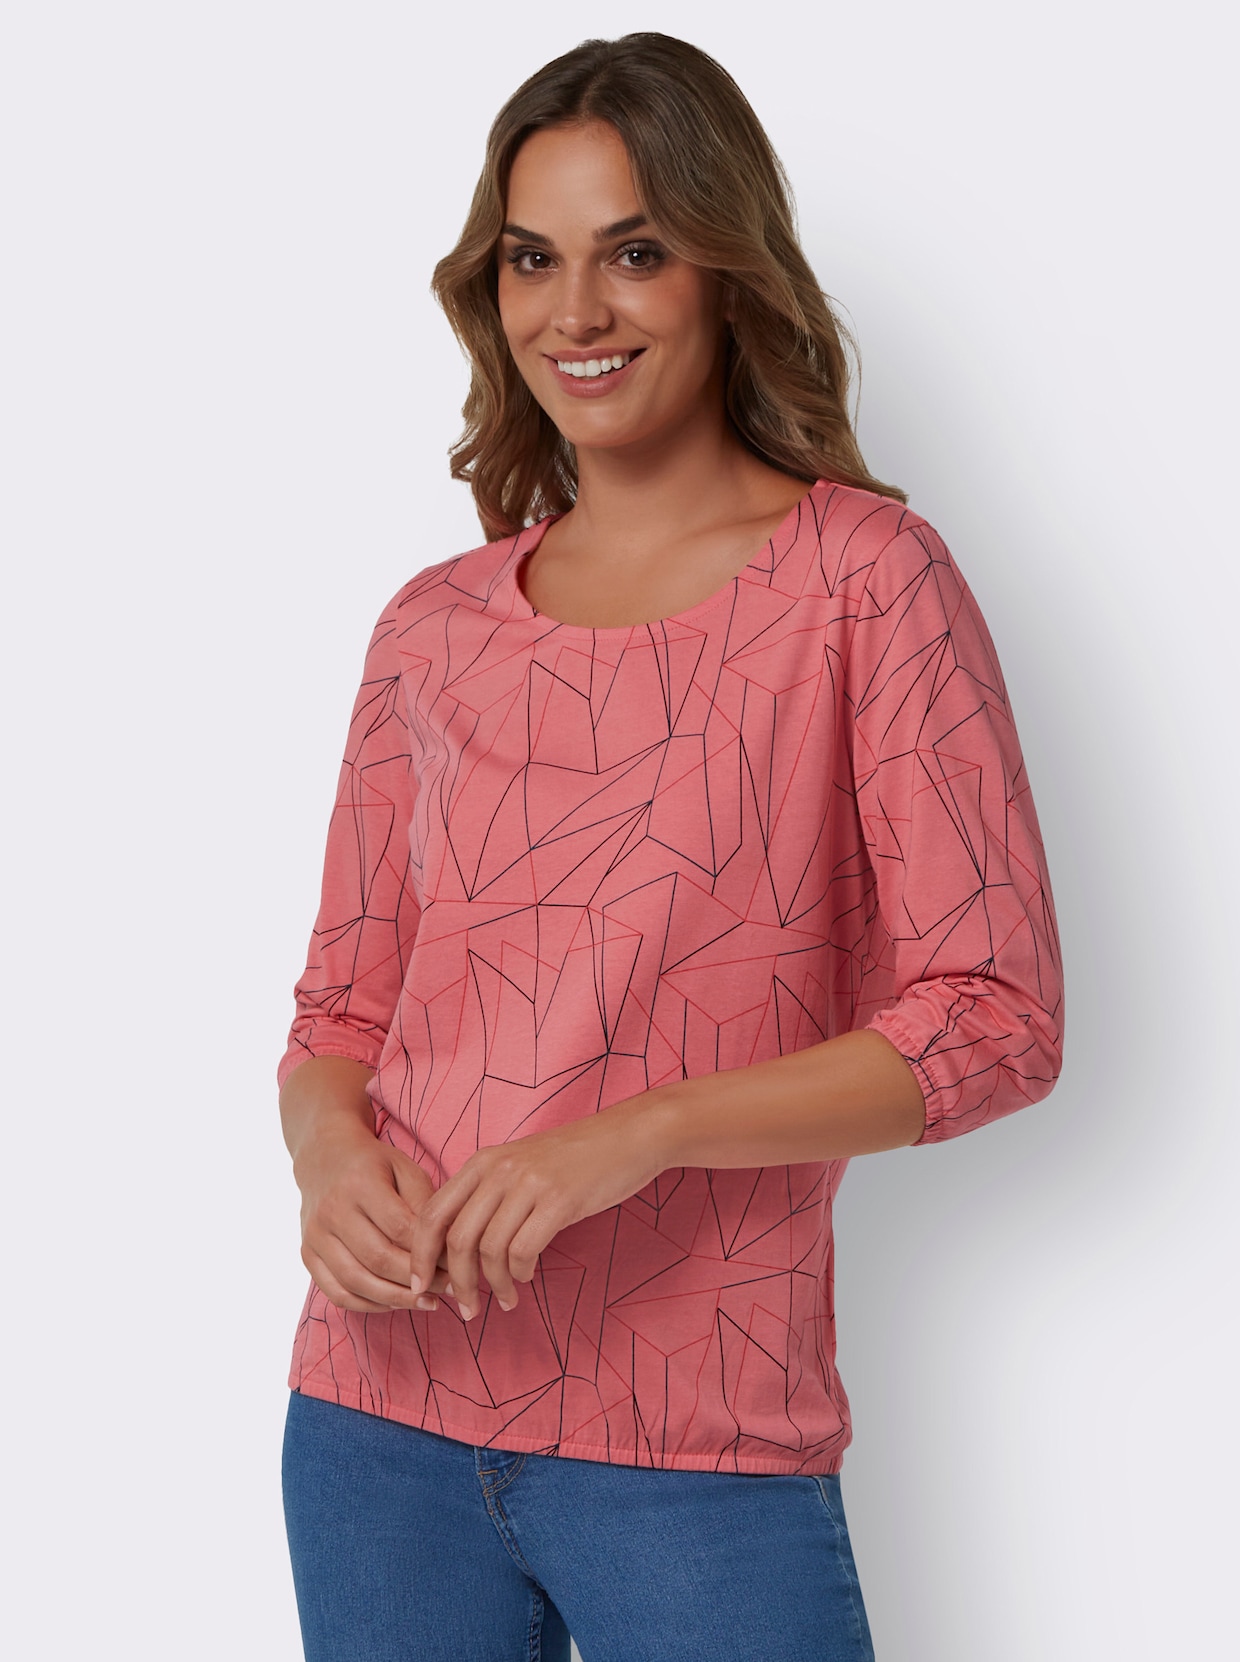 Shirt - flamingo/langoustine bedrukt